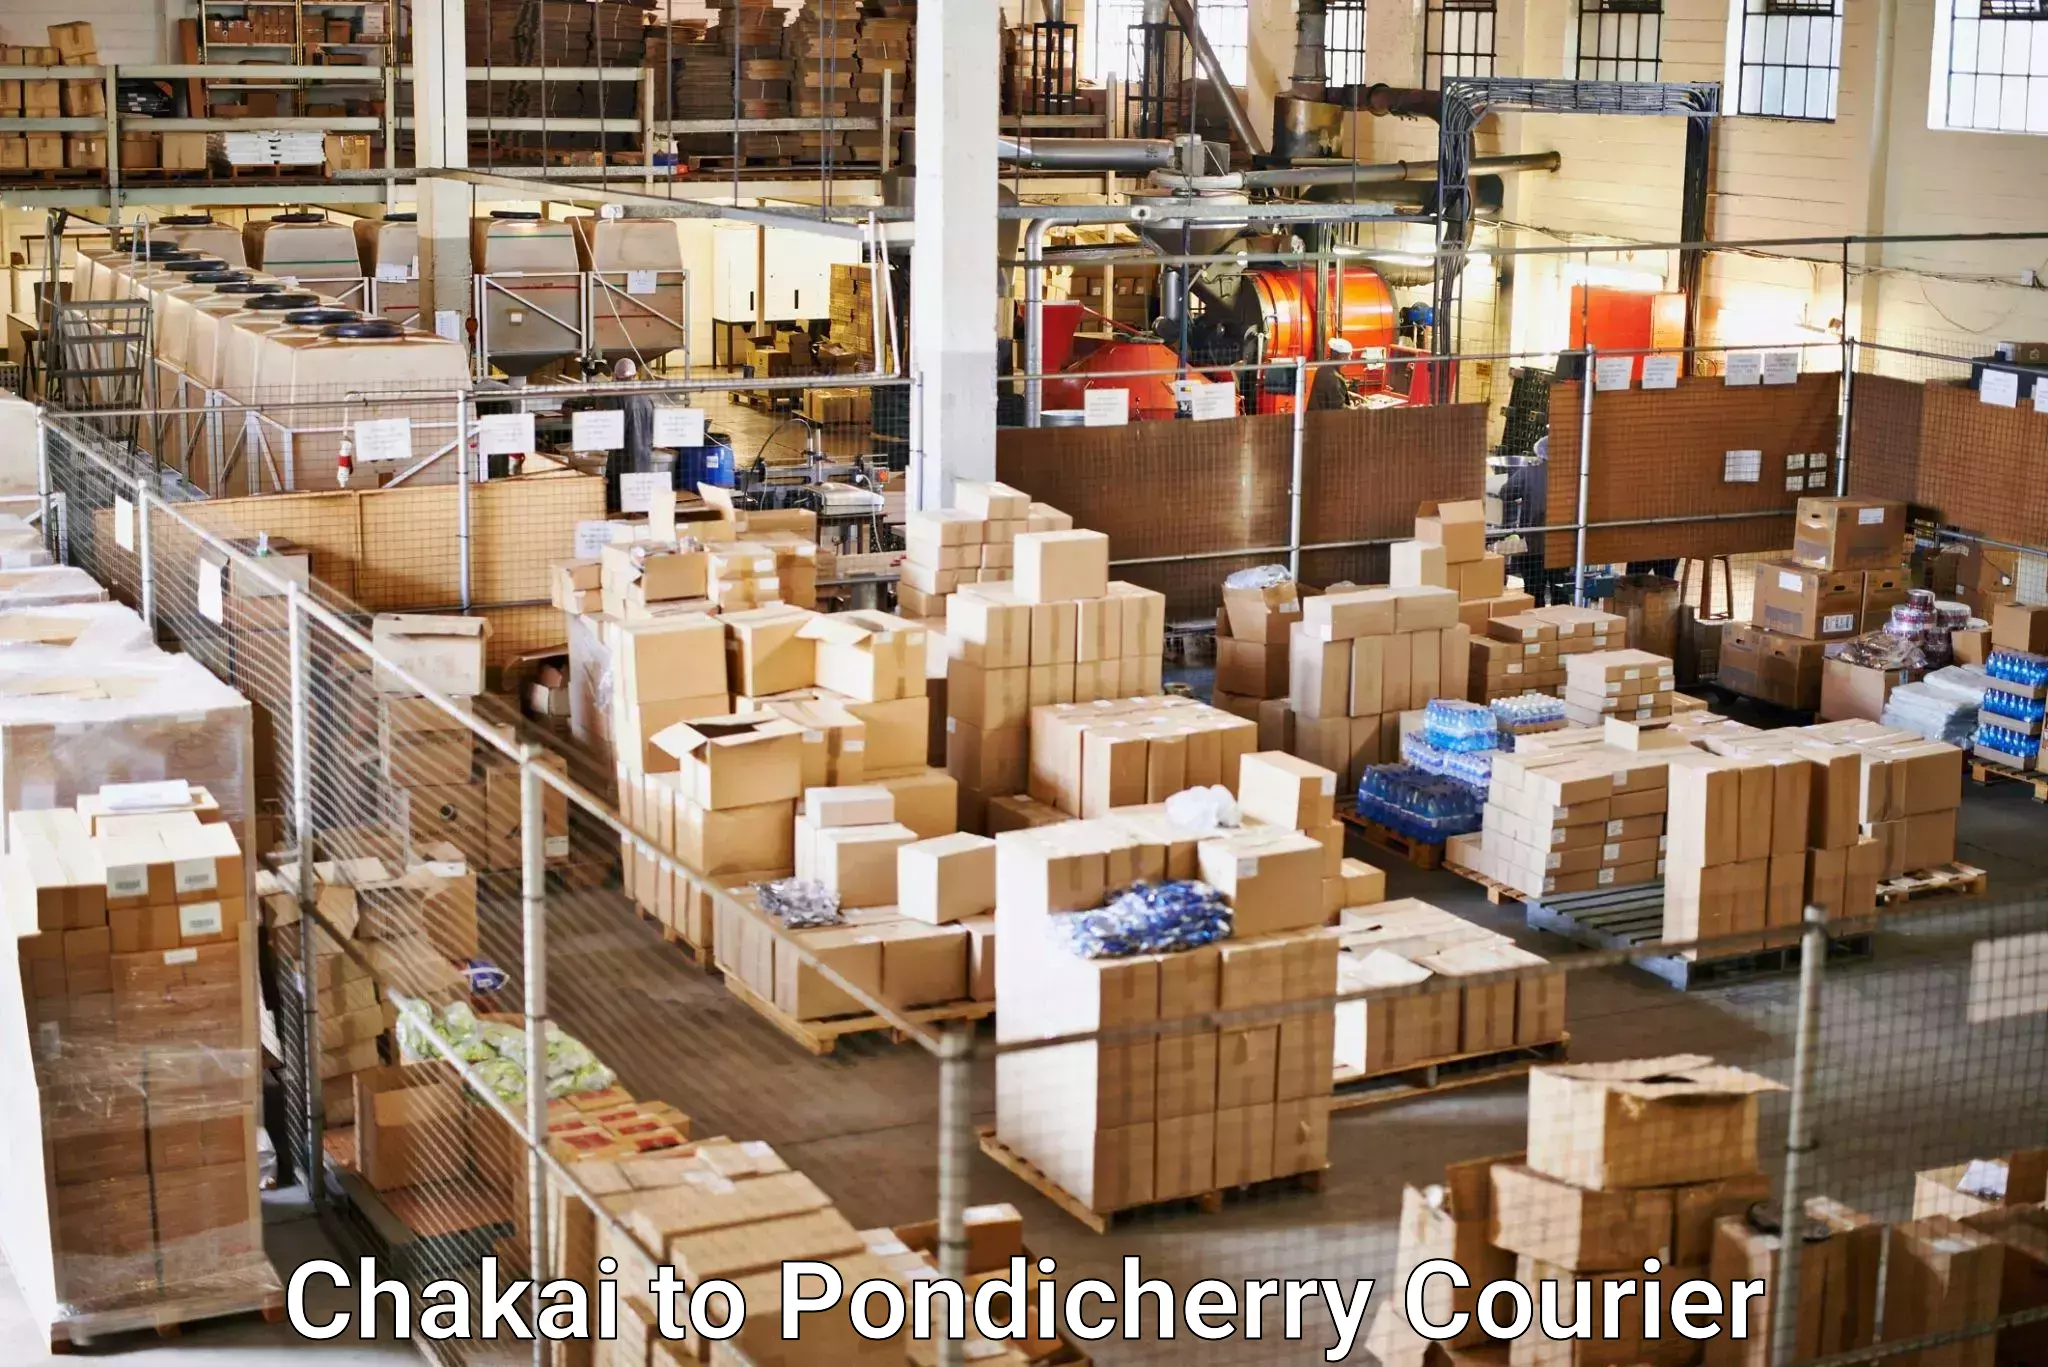 Global logistics network Chakai to Pondicherry